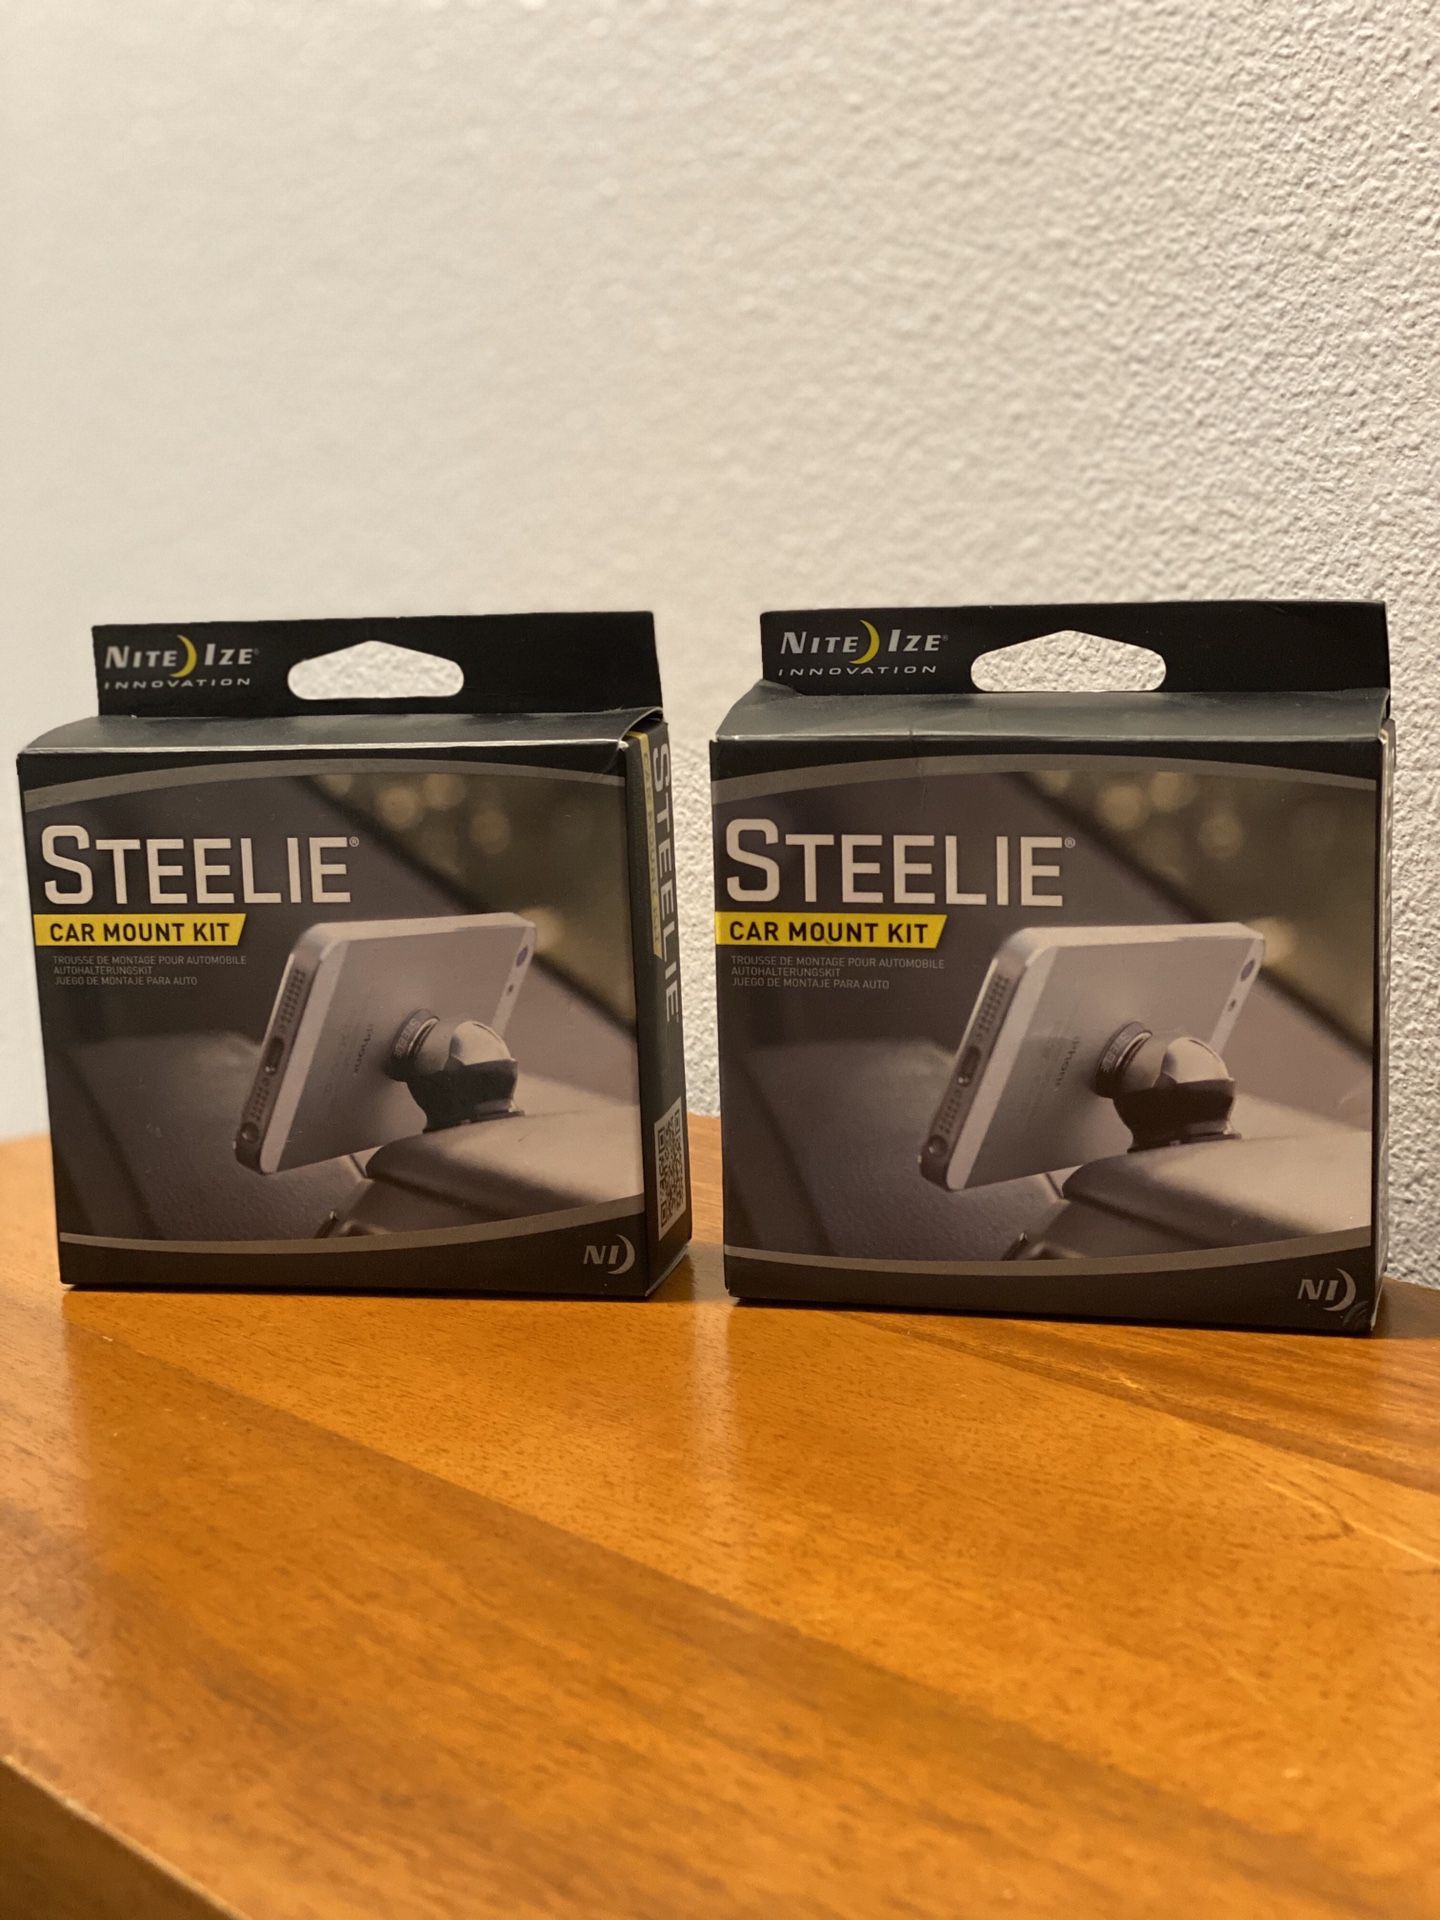 Steelie Car Mount Kit- 2 pack- $10 for both!